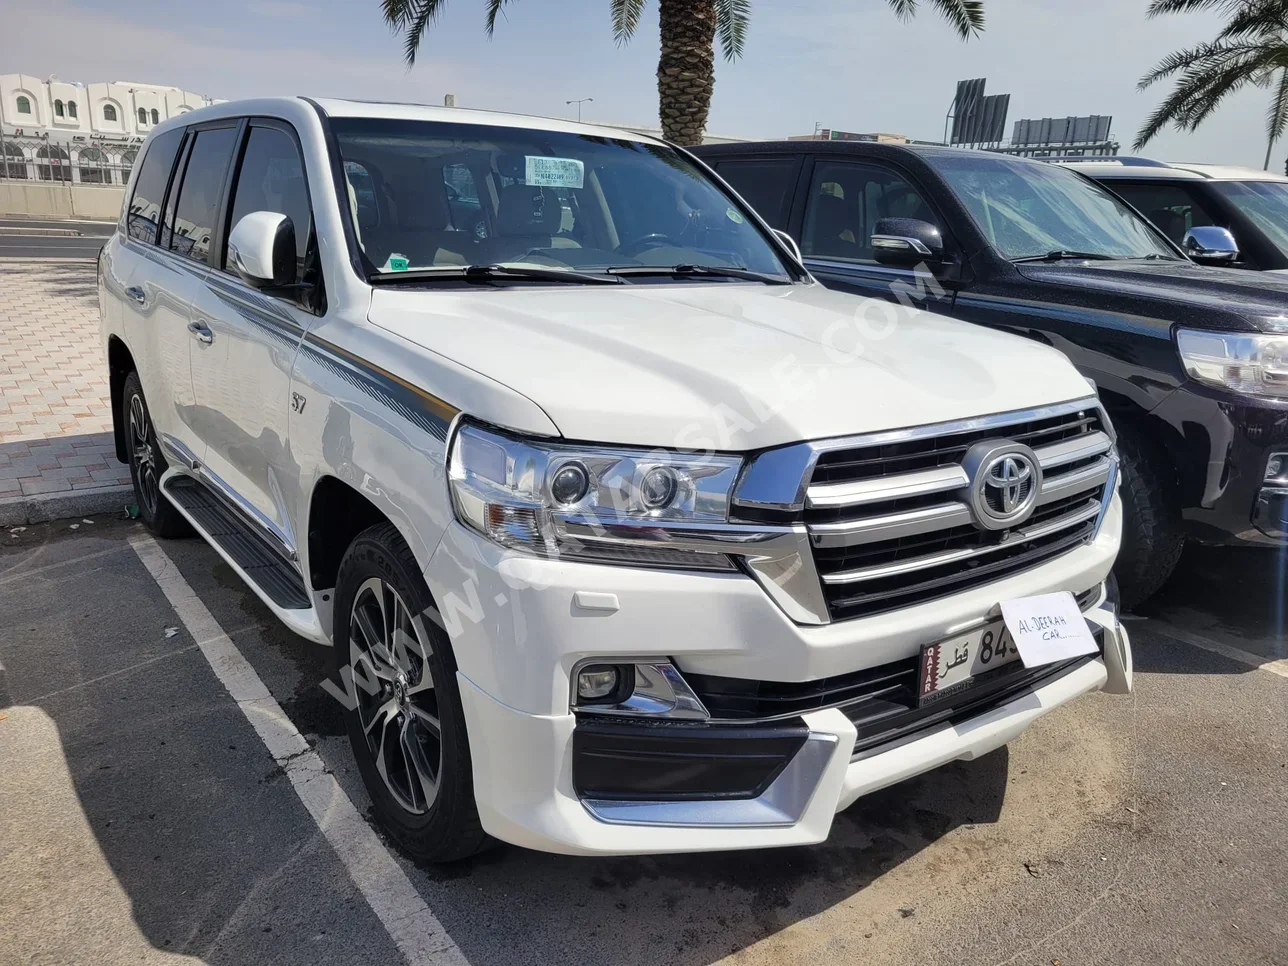 Toyota  Land Cruiser  VXR  2019  Automatic  160,000 Km  8 Cylinder  Four Wheel Drive (4WD)  SUV  White